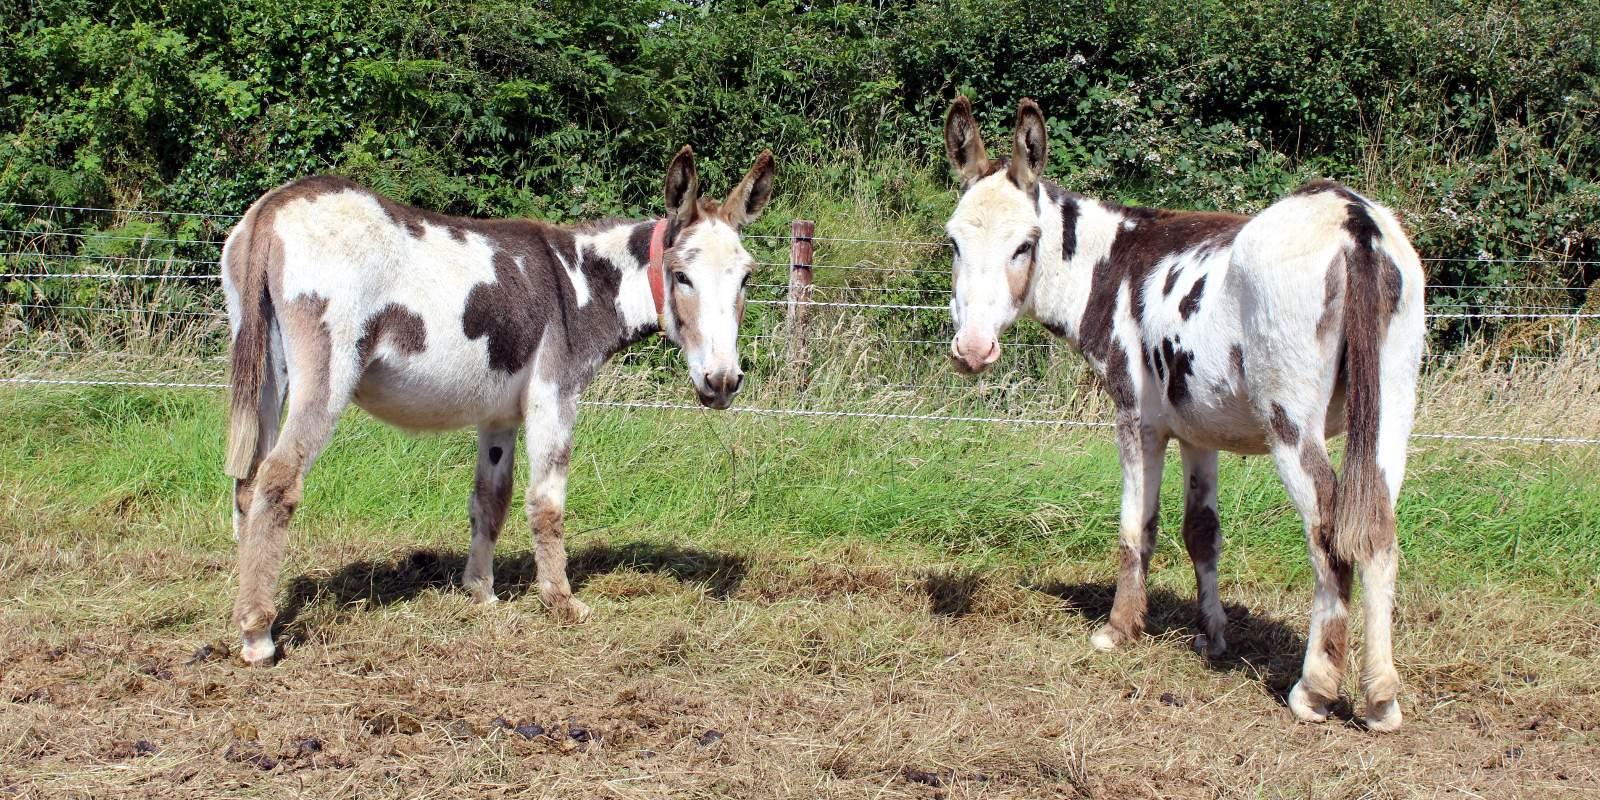 Two skewbald coloured donkeys